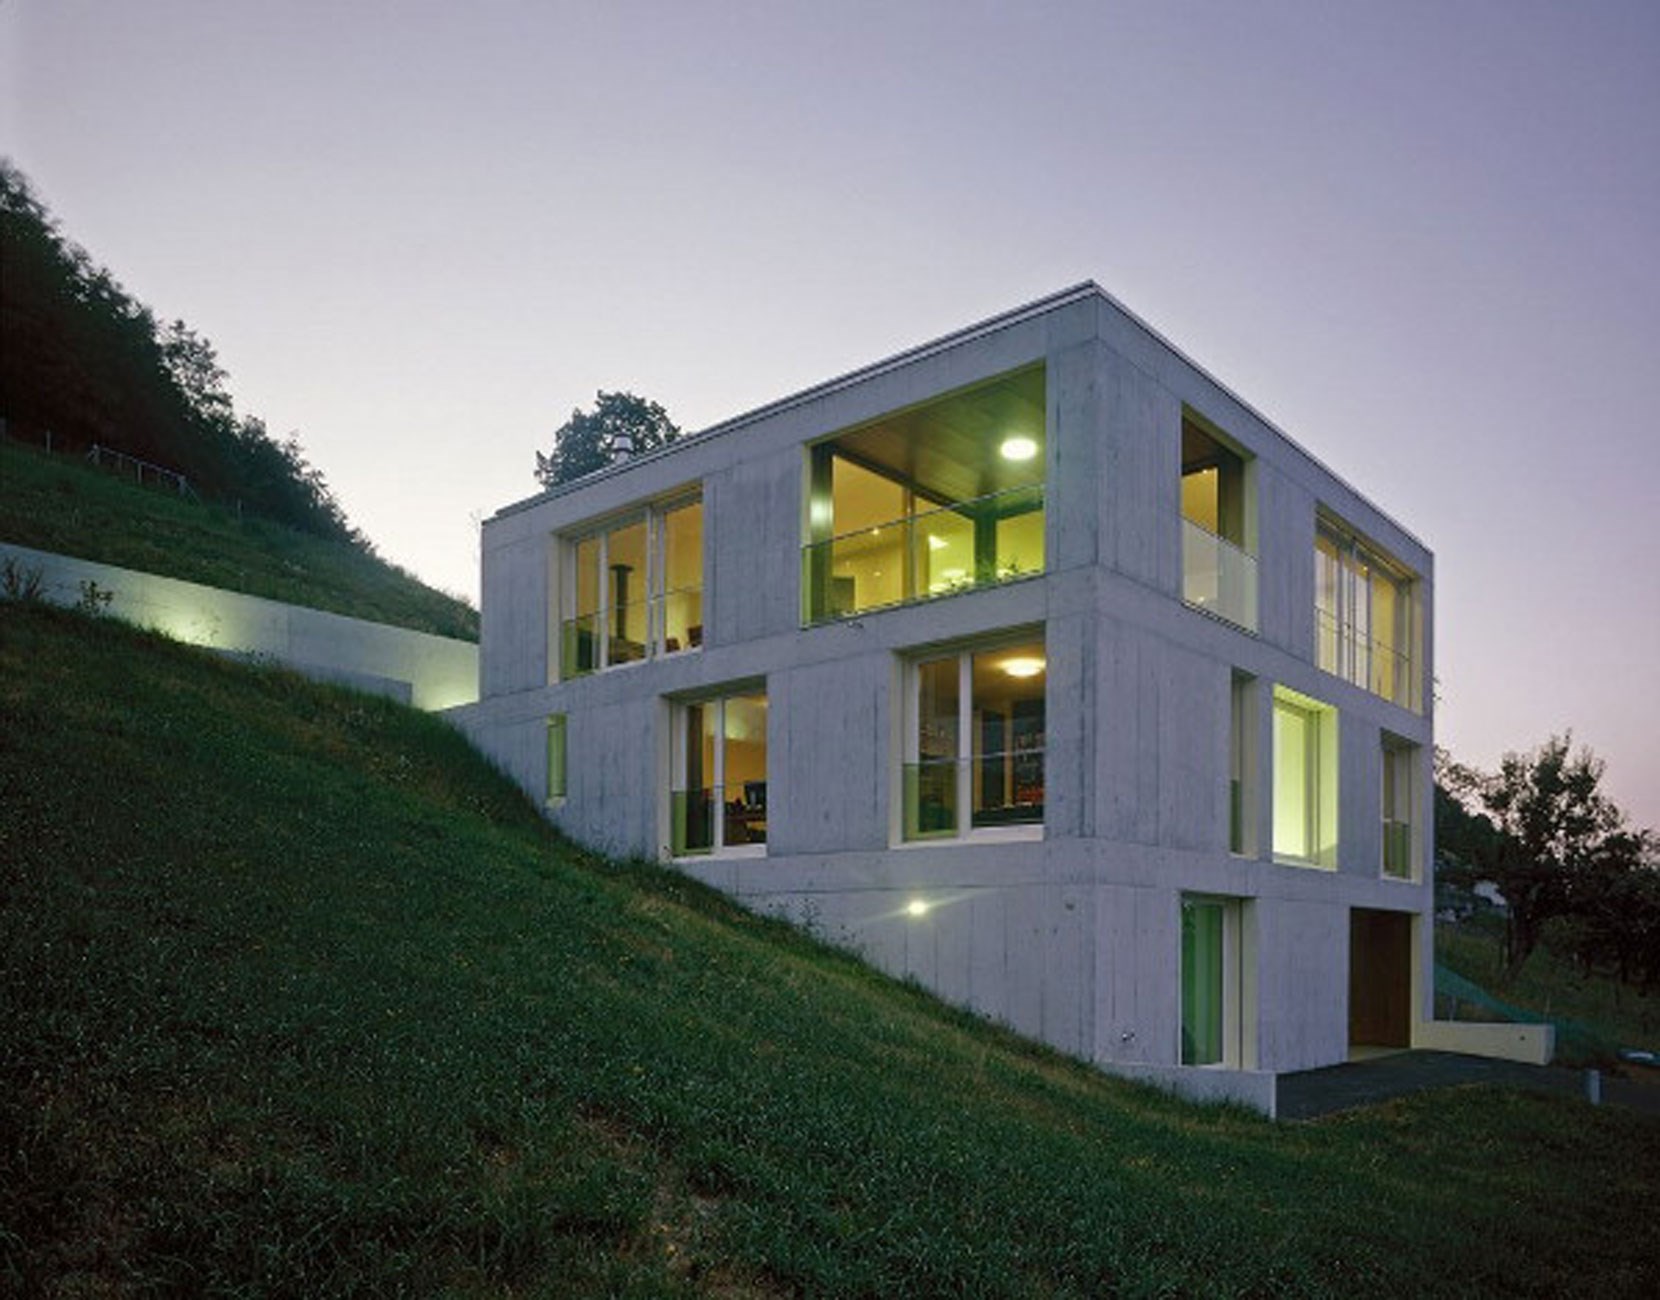 Yttervegg i betong  - modern-white-concrete-home-house-design-that-has-warm-lighting-can-add-the-beauty-inside-the-modern-house-design-ideas-with-white-exterior-wall-inside-house-new-concrete-home-design.jpg - Fixno1